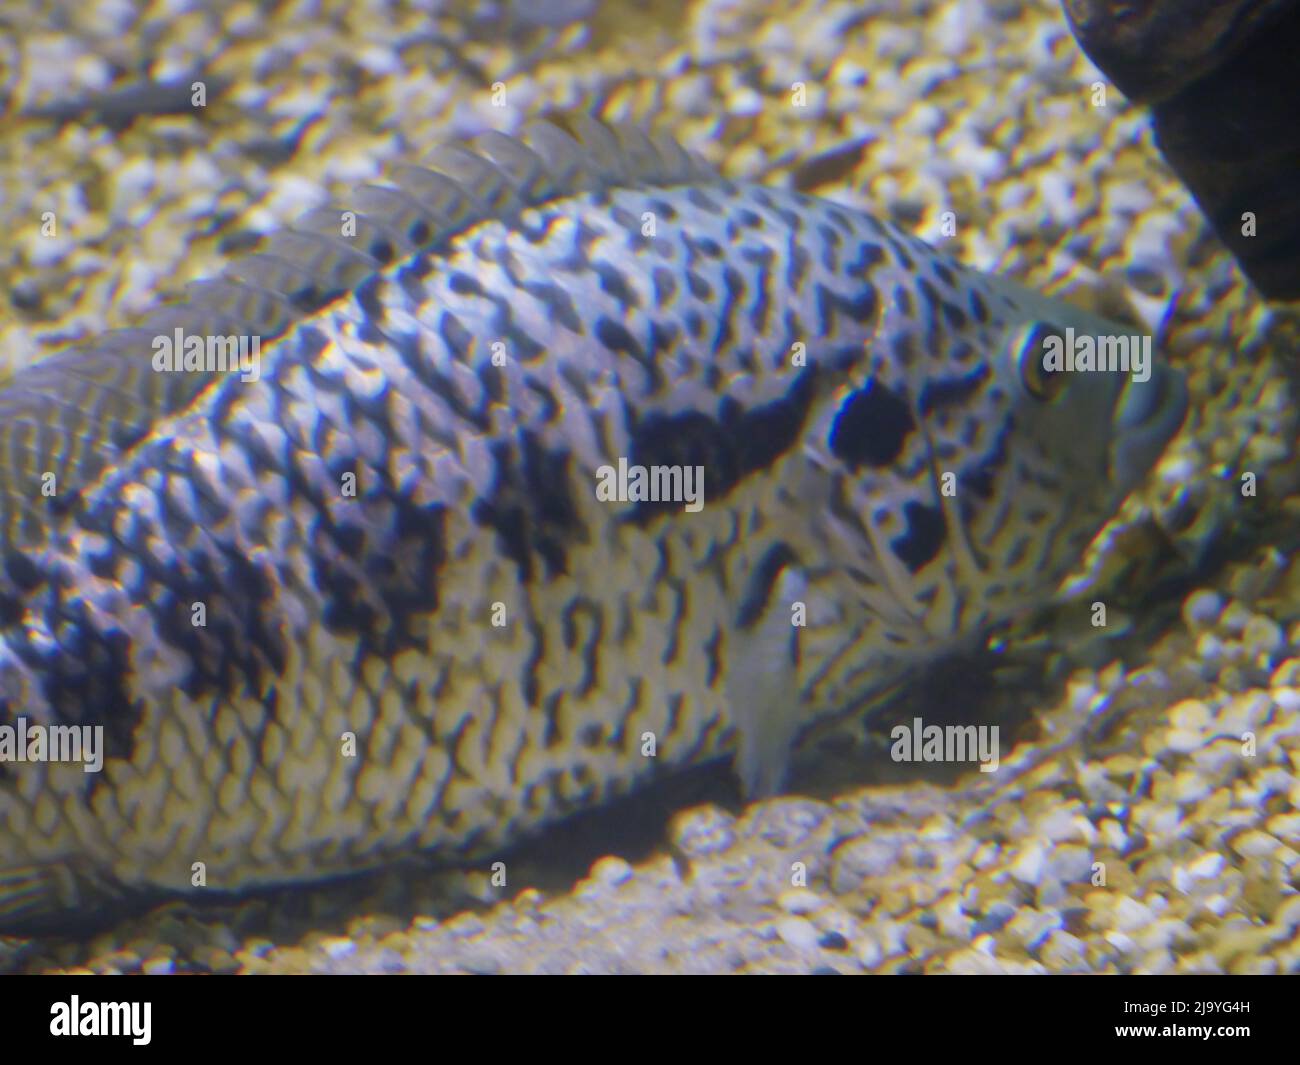 Fish relaxing underwater in aquarium fish tank Stock Photo